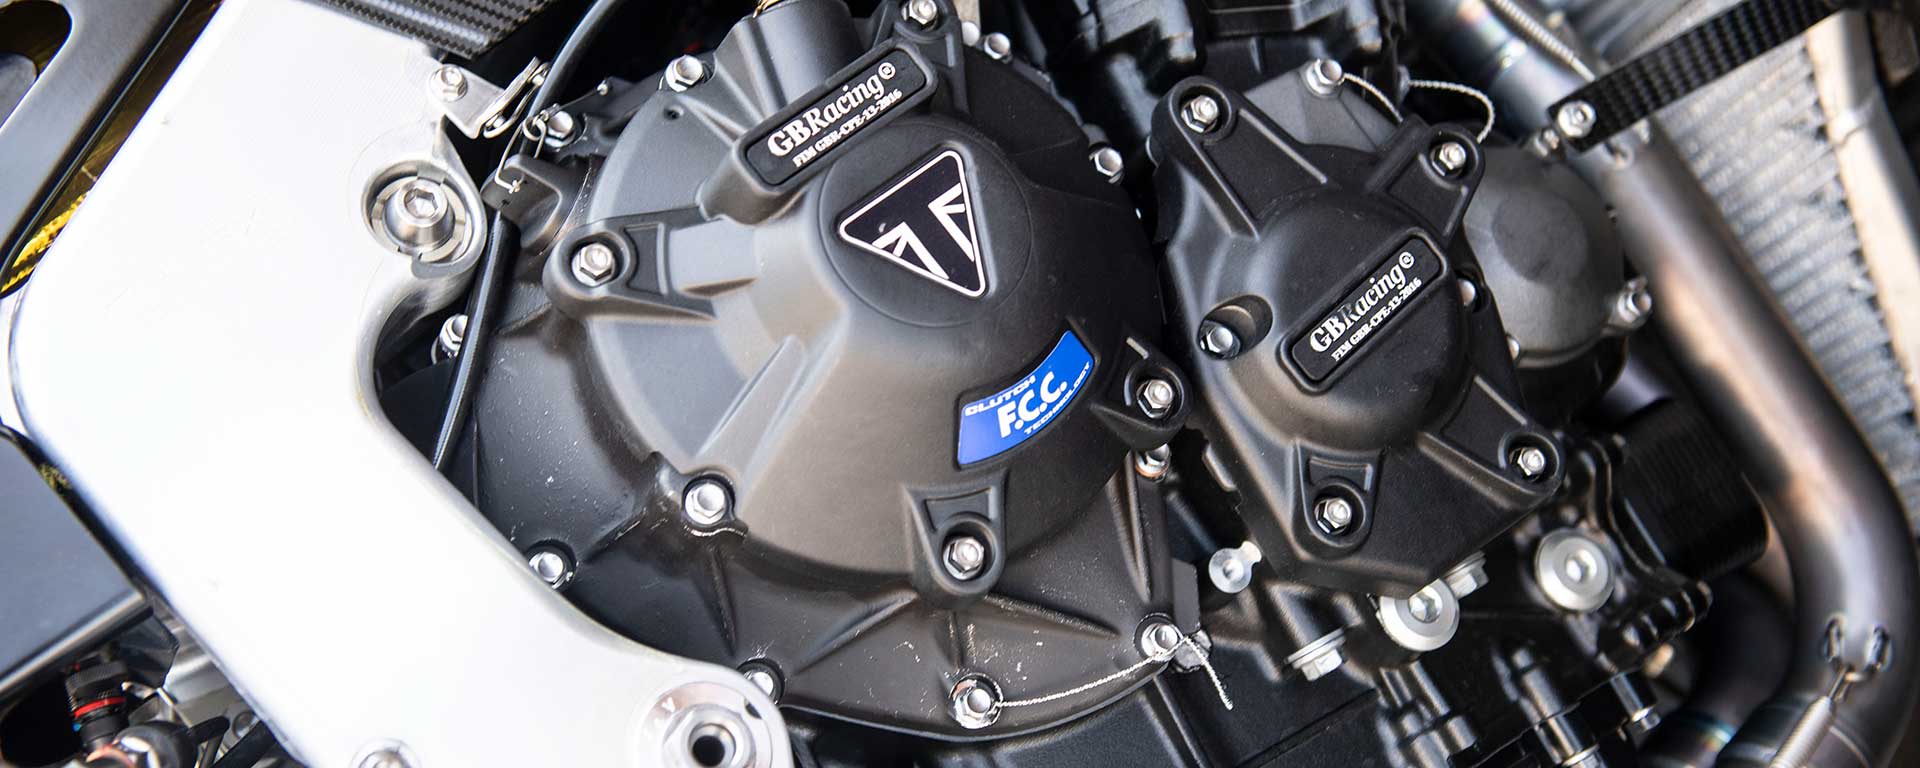 Triumph engine for moto2)